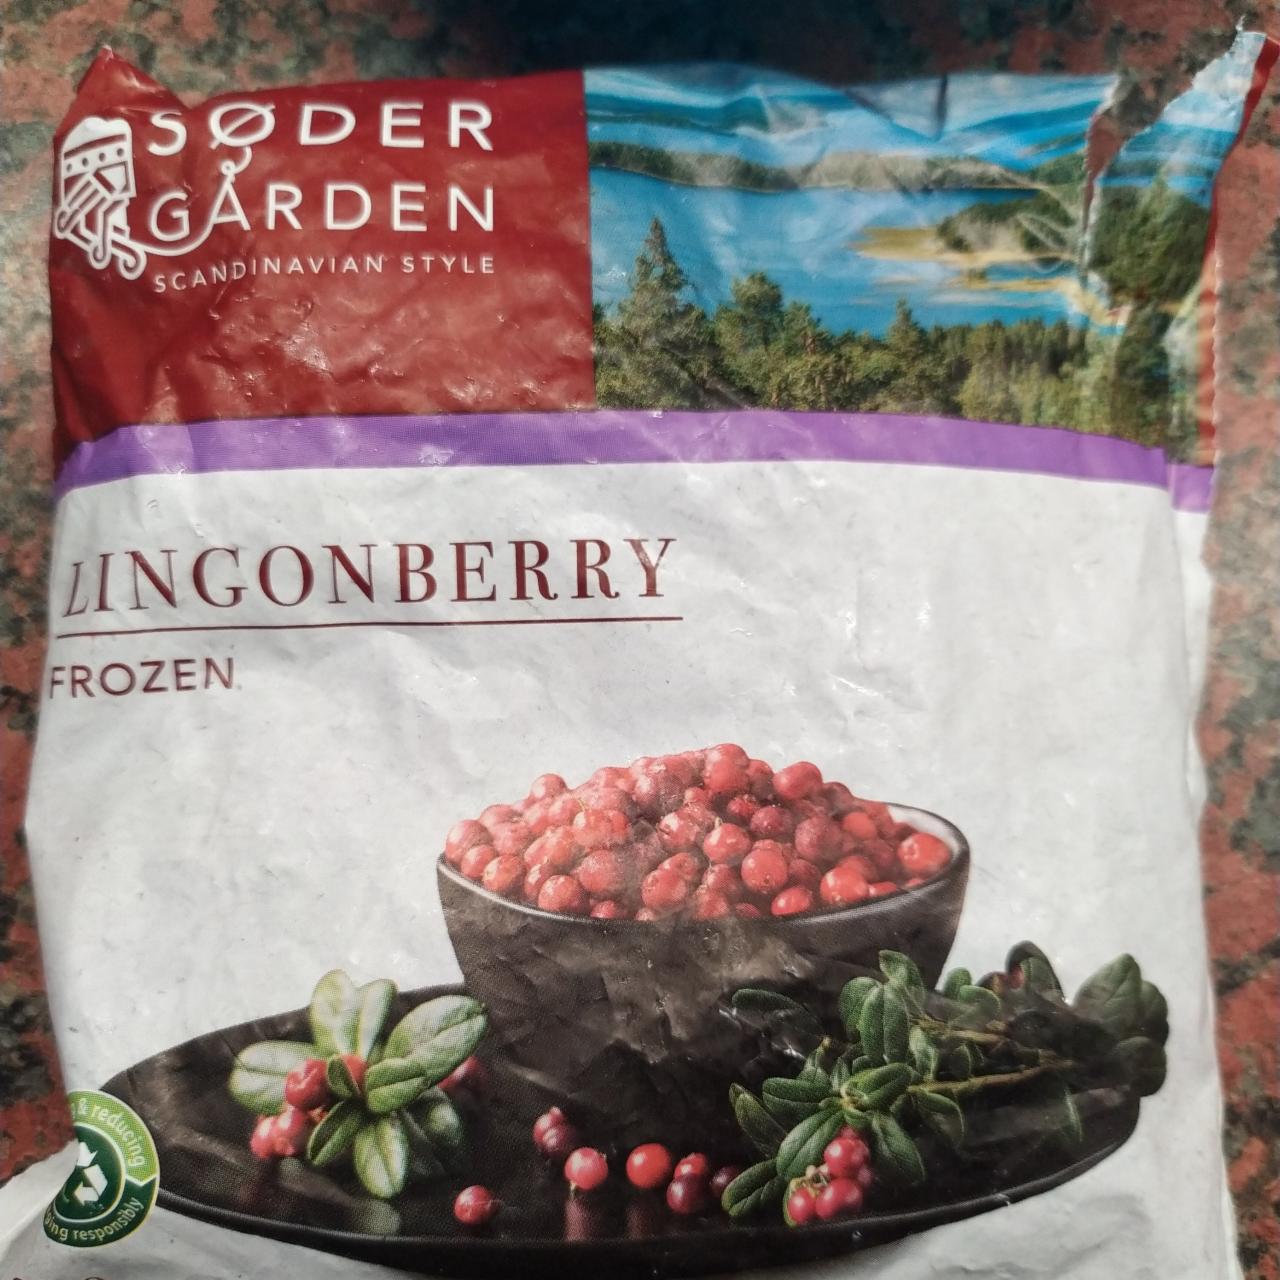 Fotografie - Lingonberry frozen Sødergården